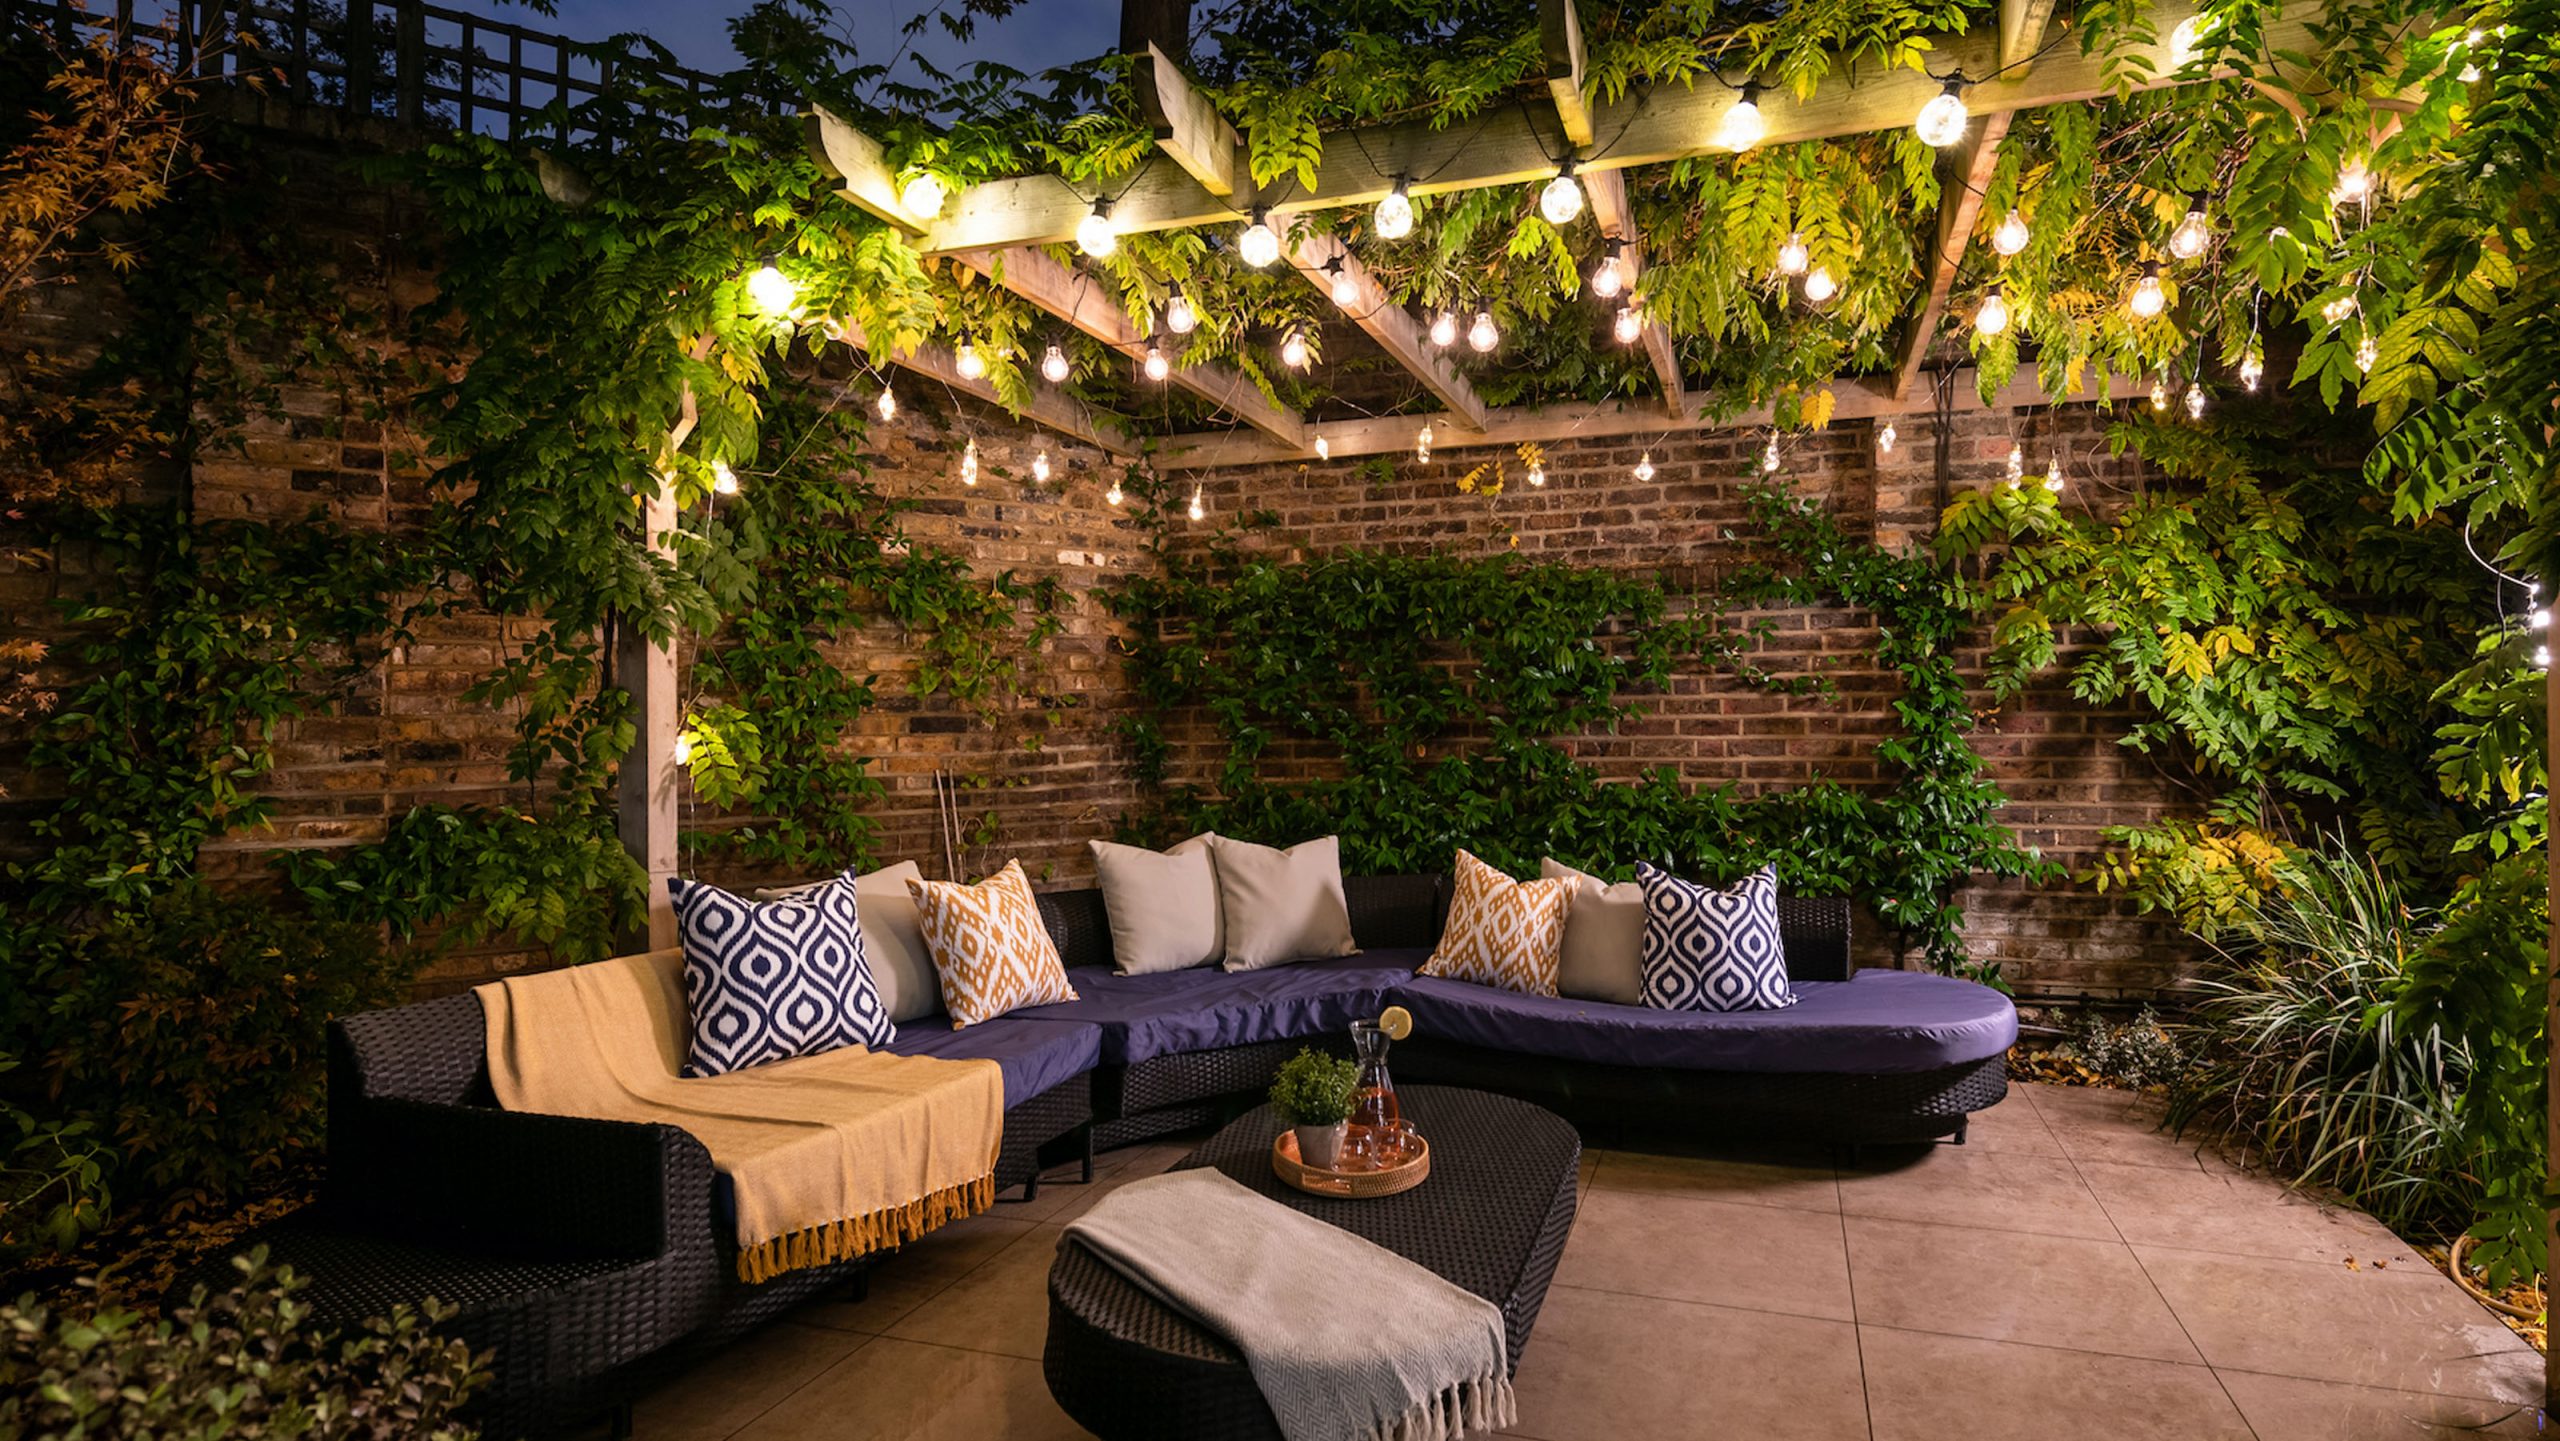 Summer garden idea with outdoor lighting ideas